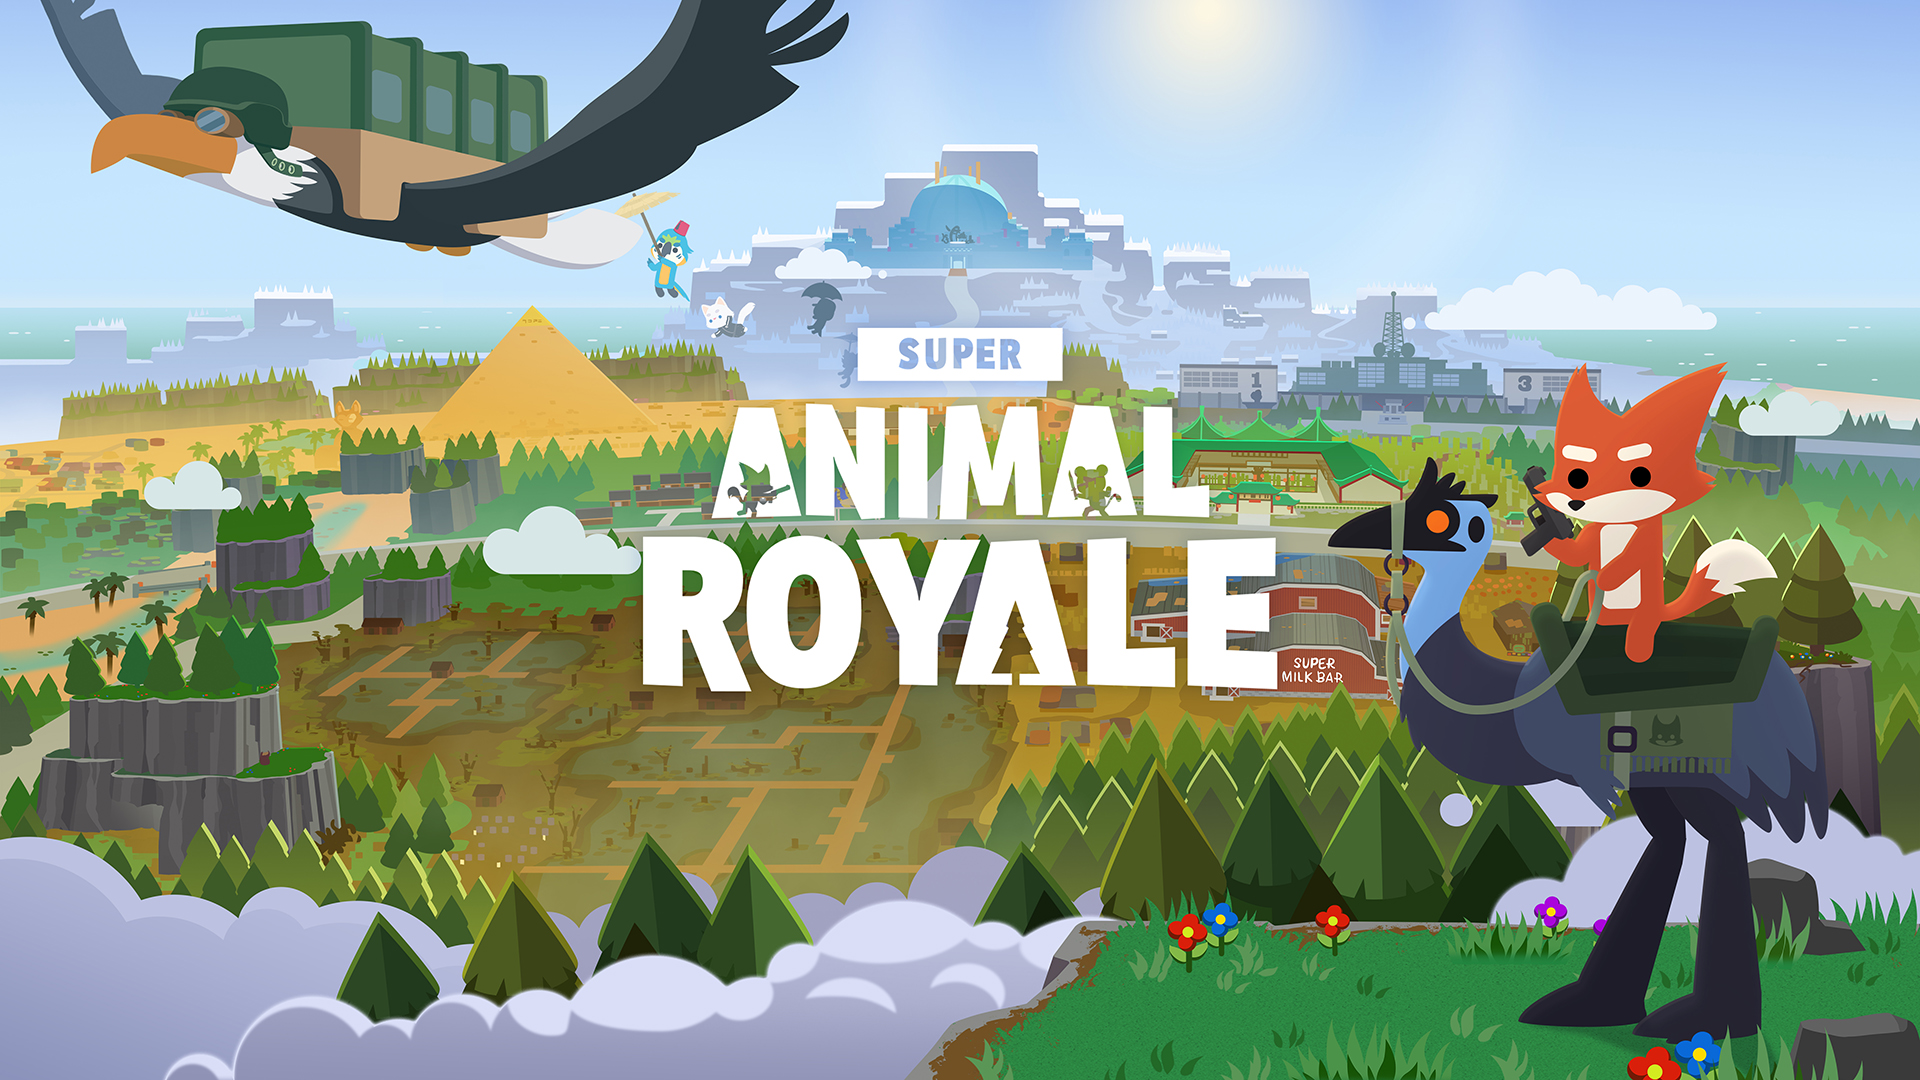 Super Animal Royale - Season 2, CRISPRmas, Cross-Play Parties and